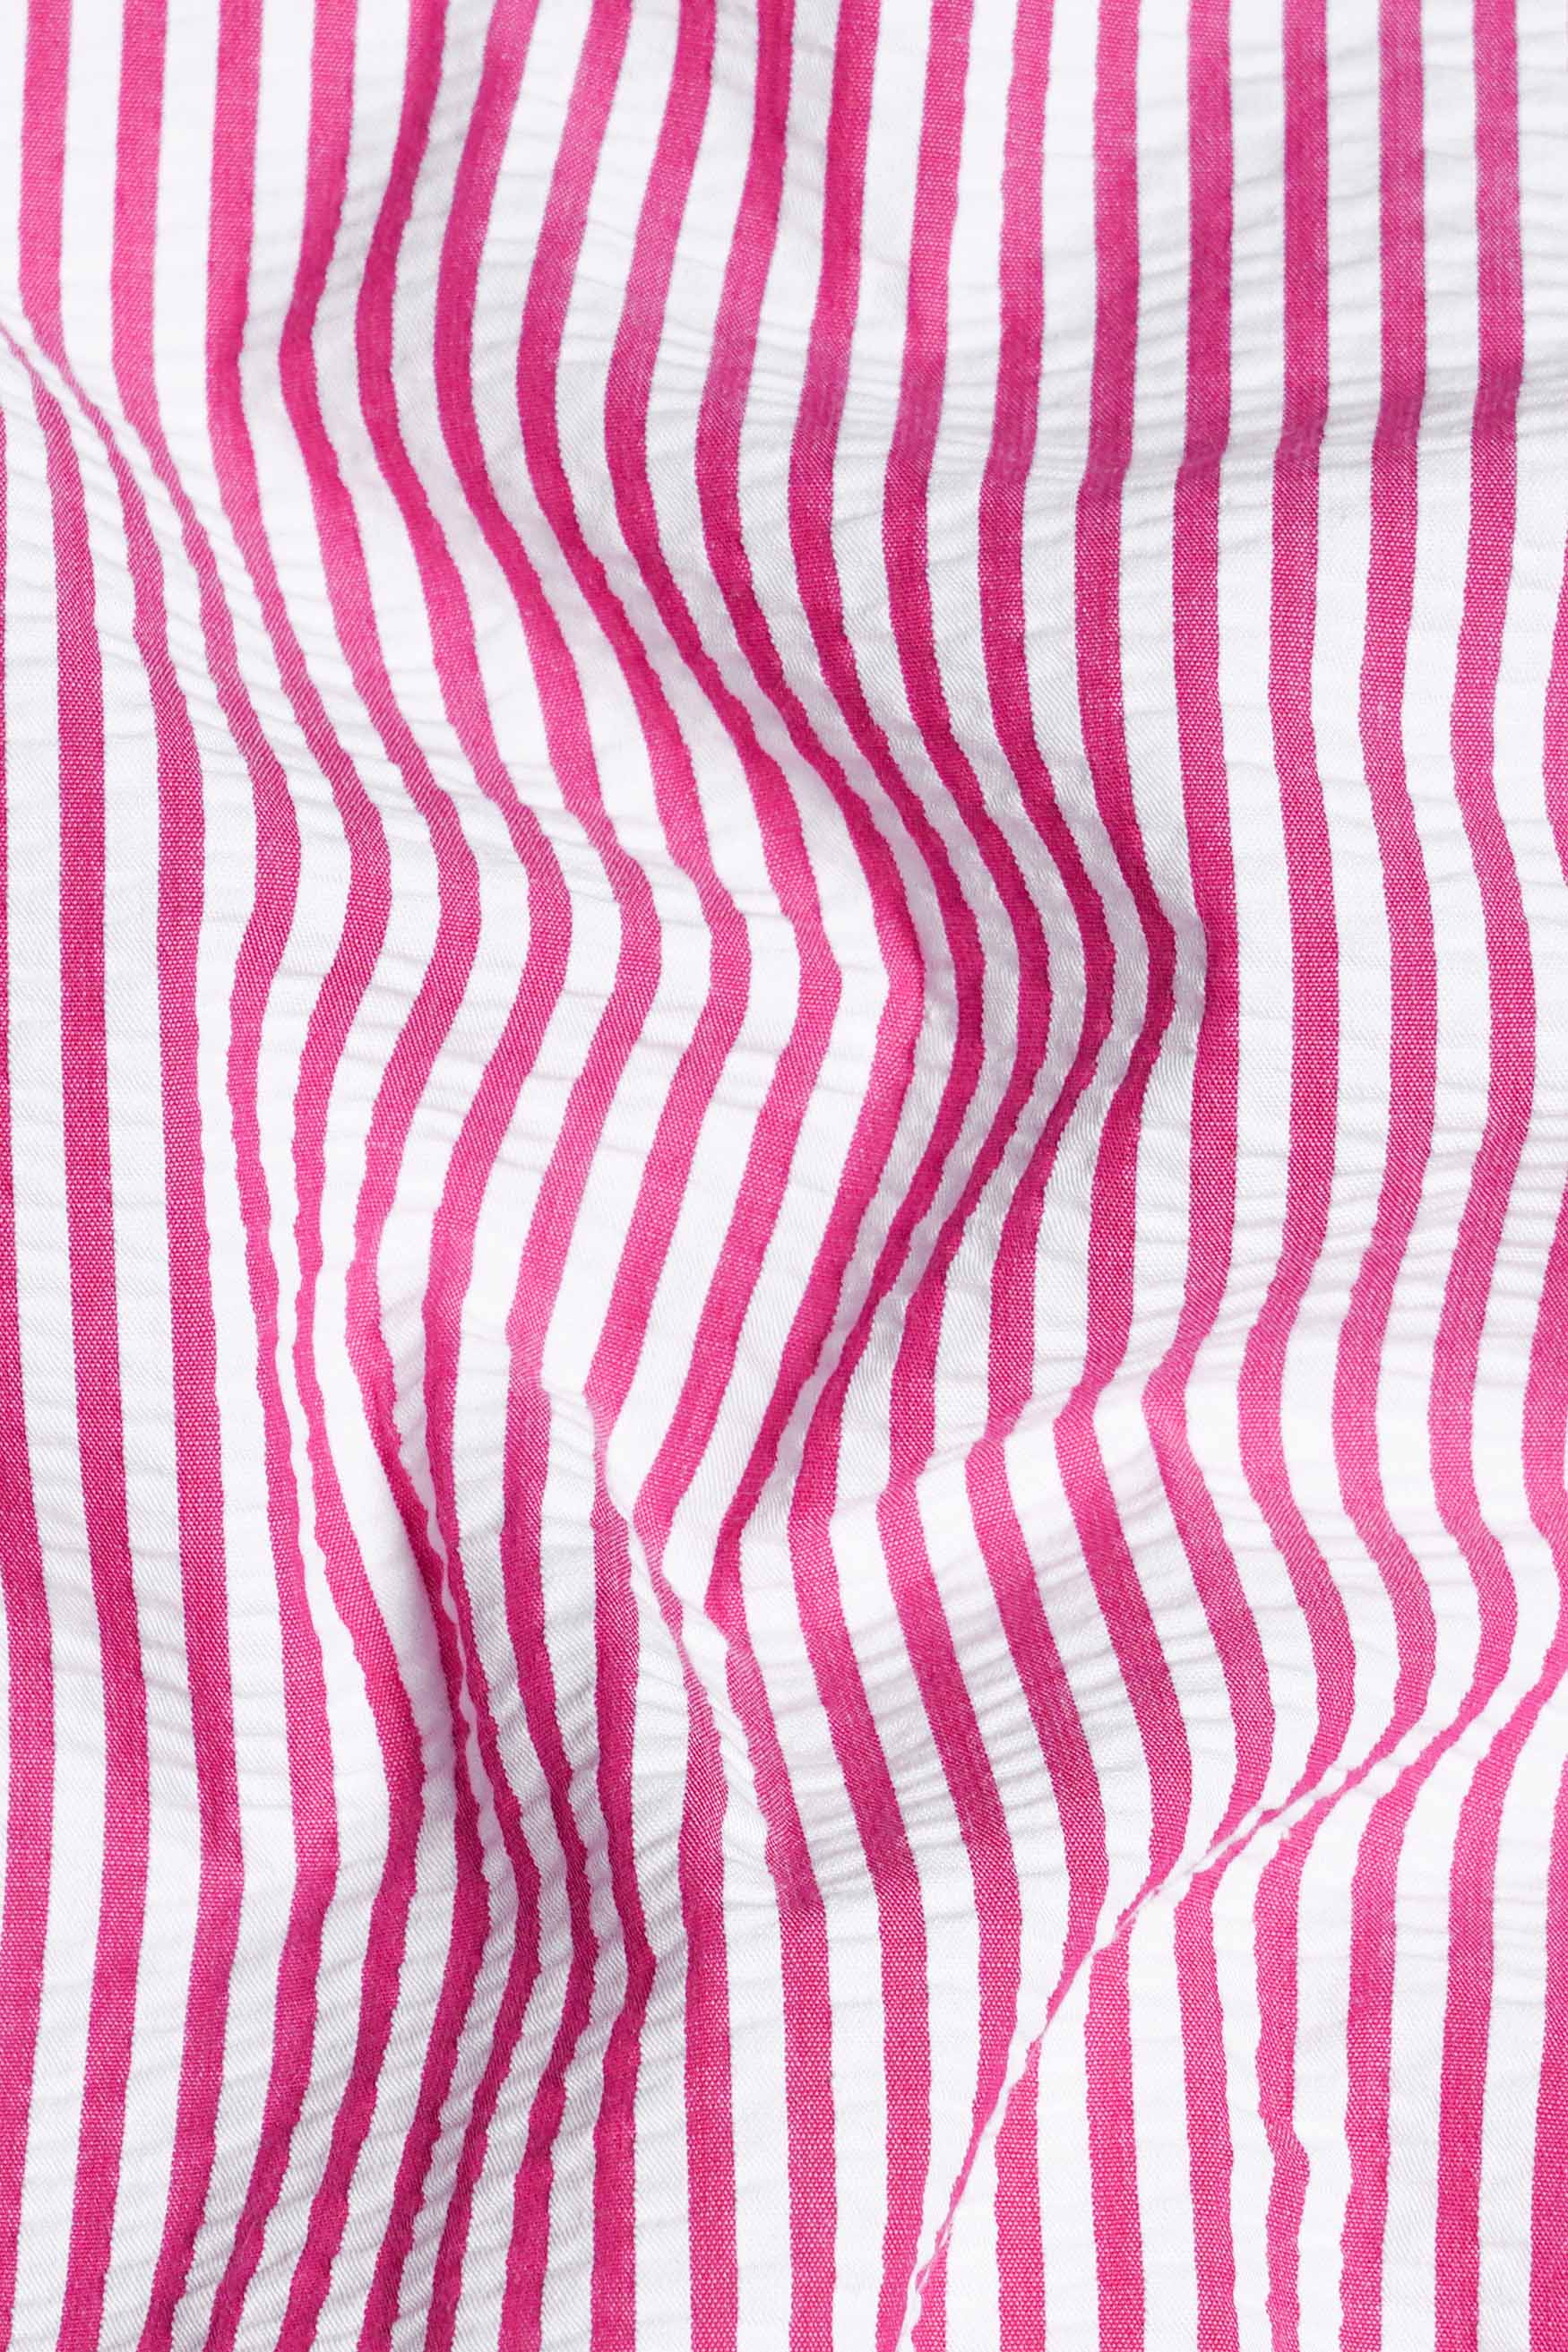 Thulian Pink and White Striped Seersucker Giza Cotton Shirt 11599-CA-38, 11599-CA-H-38, 11599-CA-39, 11599-CA-H-39, 11599-CA-40, 11599-CA-H-40, 11599-CA-42, 11599-CA-H-42, 11599-CA-44, 11599-CA-H-44, 11599-CA-46, 11599-CA-H-46, 11599-CA-48, 11599-CA-H-48, 11599-CA-50, 11599-CA-H-50, 11599-CA-52, 11599-CA-H-52 